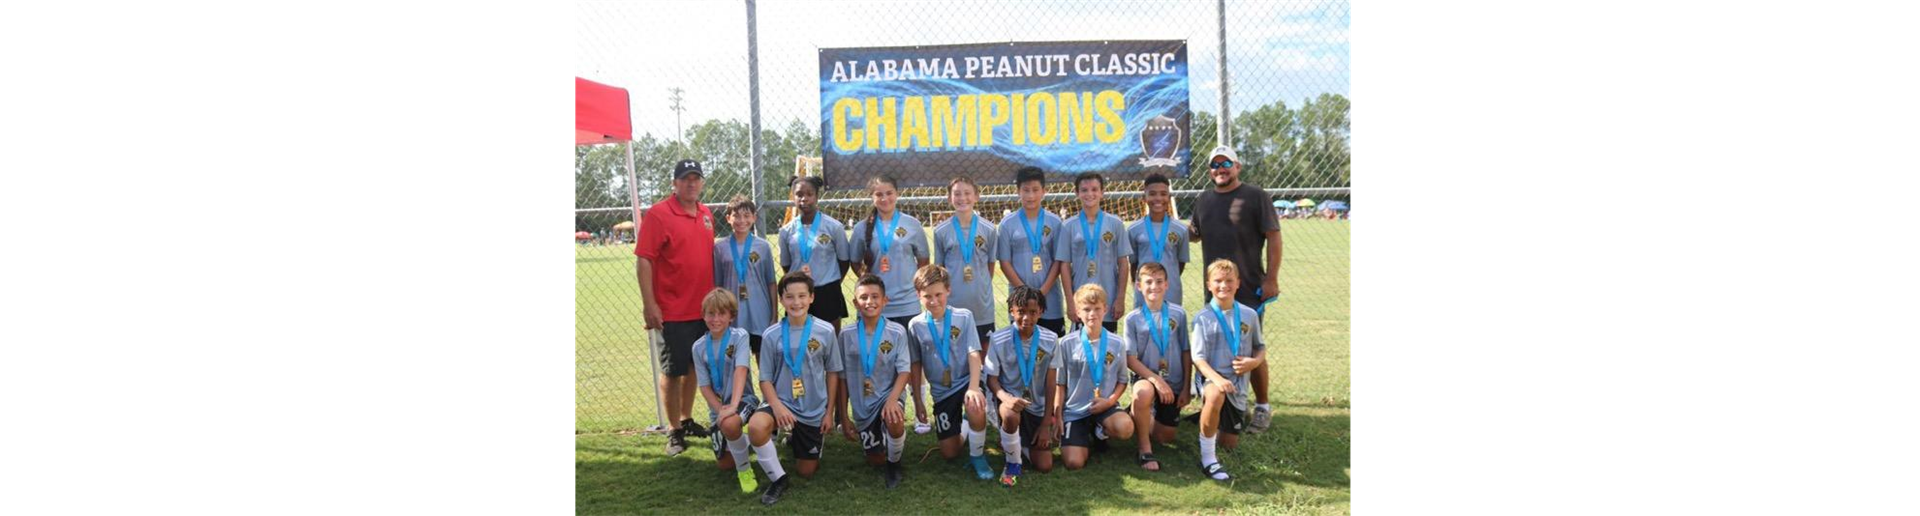 Alabama Peanut Classic 14U Champions